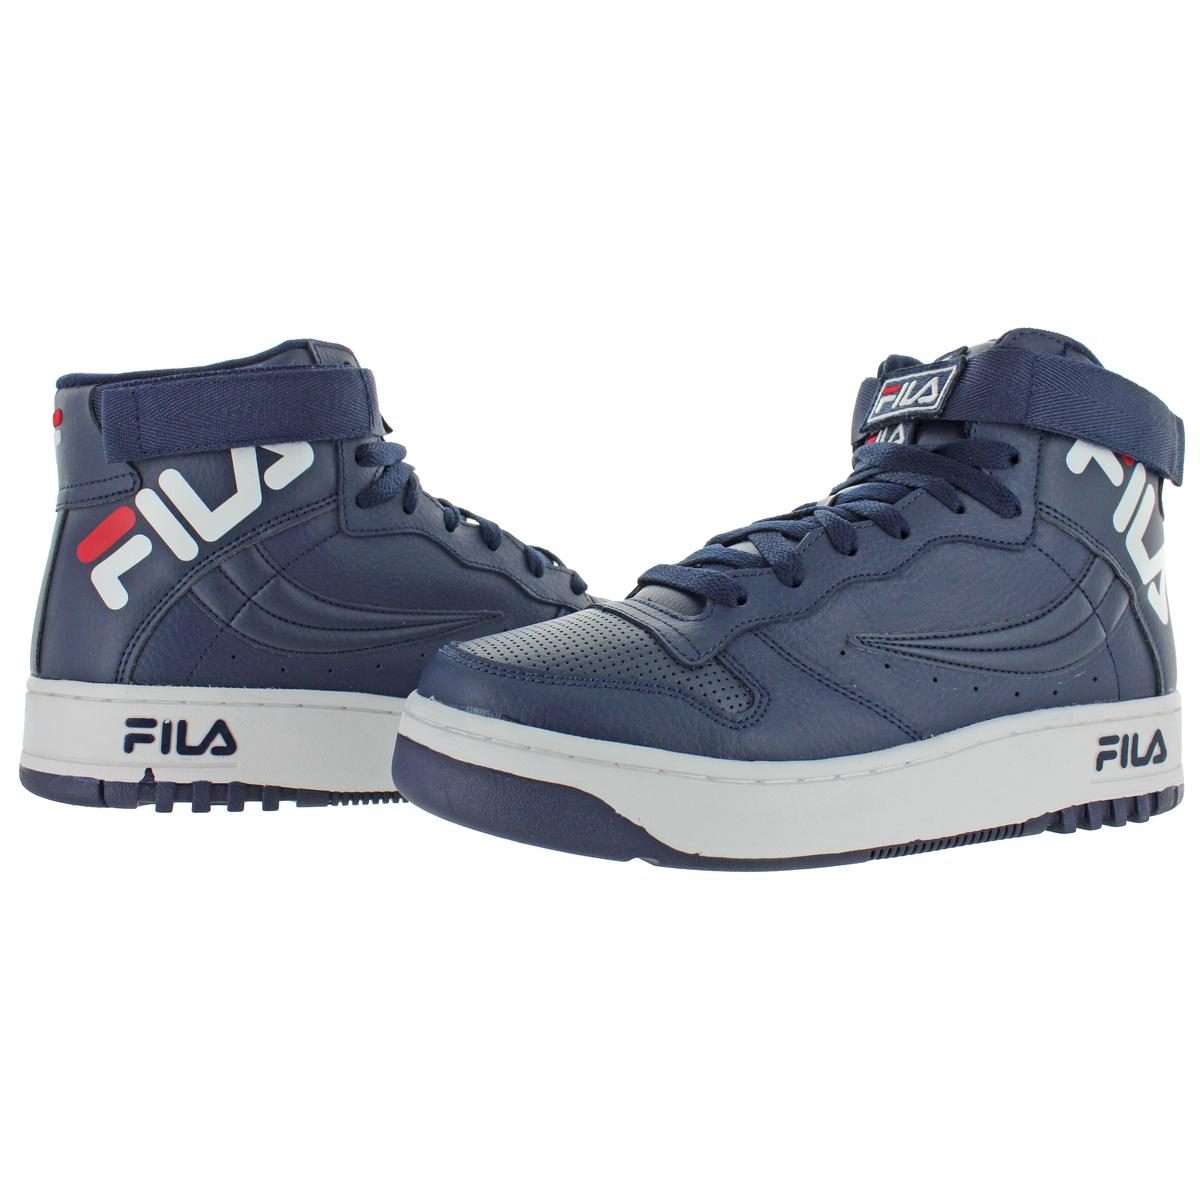 Fila Mens FX-100 Big Logo Navy High Top Sneakers Shoes 11.5 Medium (D) BHFO 7005 | eBay